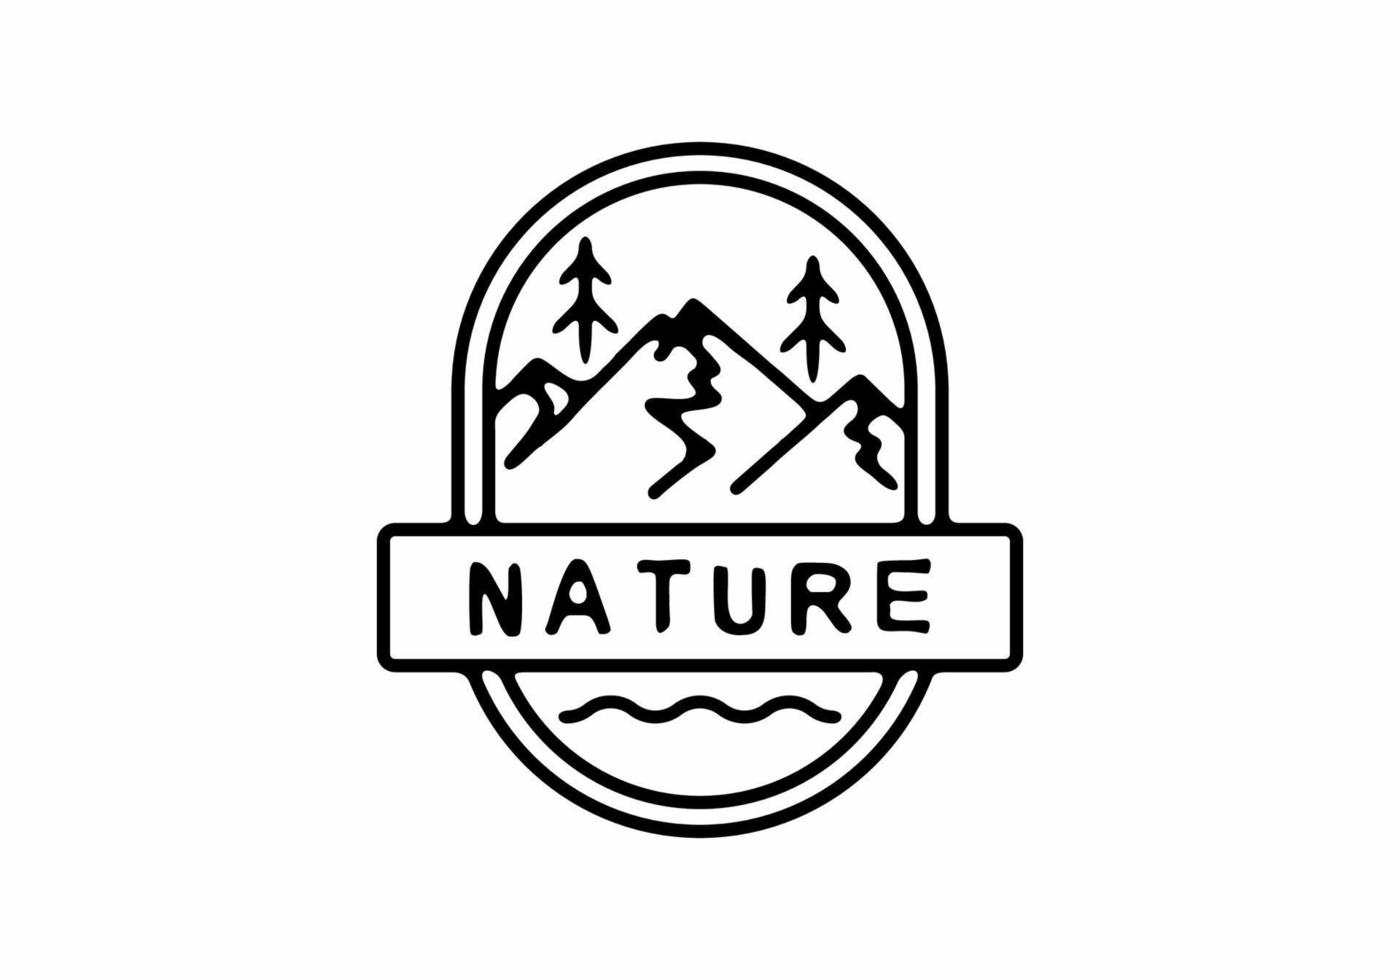 Black line art illustration of nature badge vector